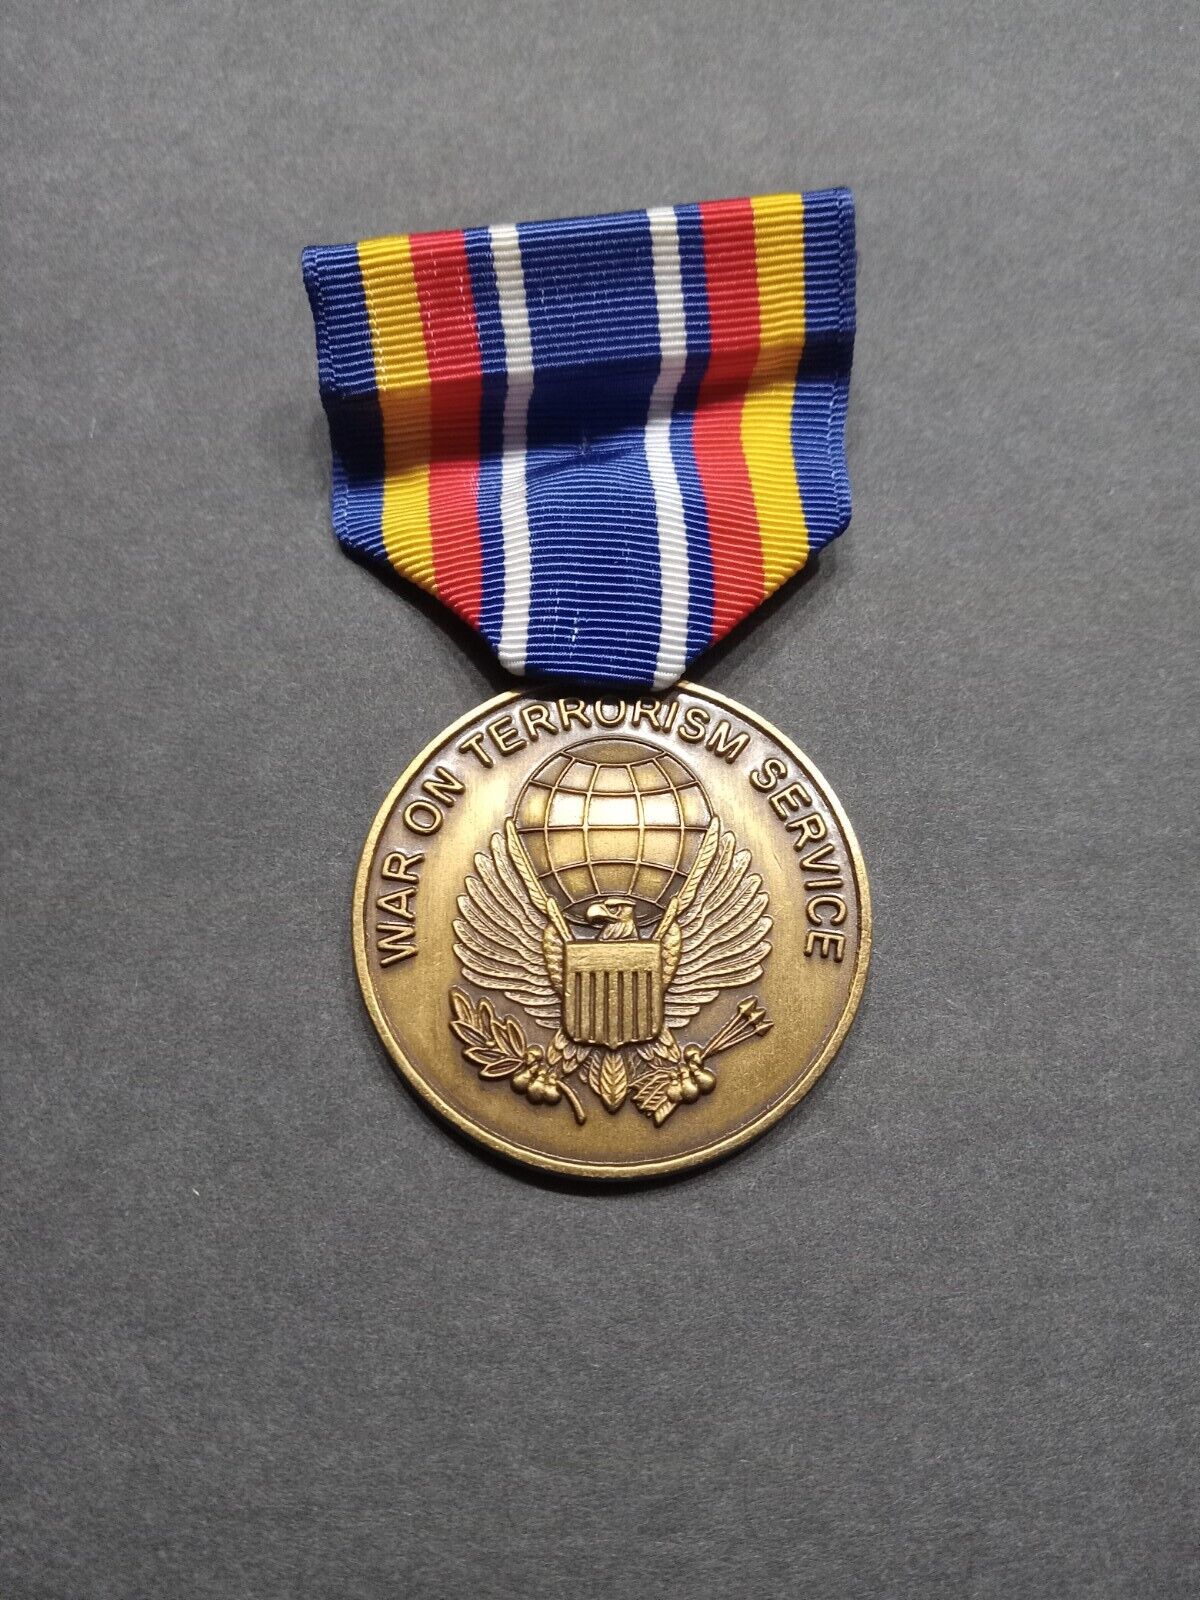 Vintage 2000s Us Army Global War On Terrorism Service Medal